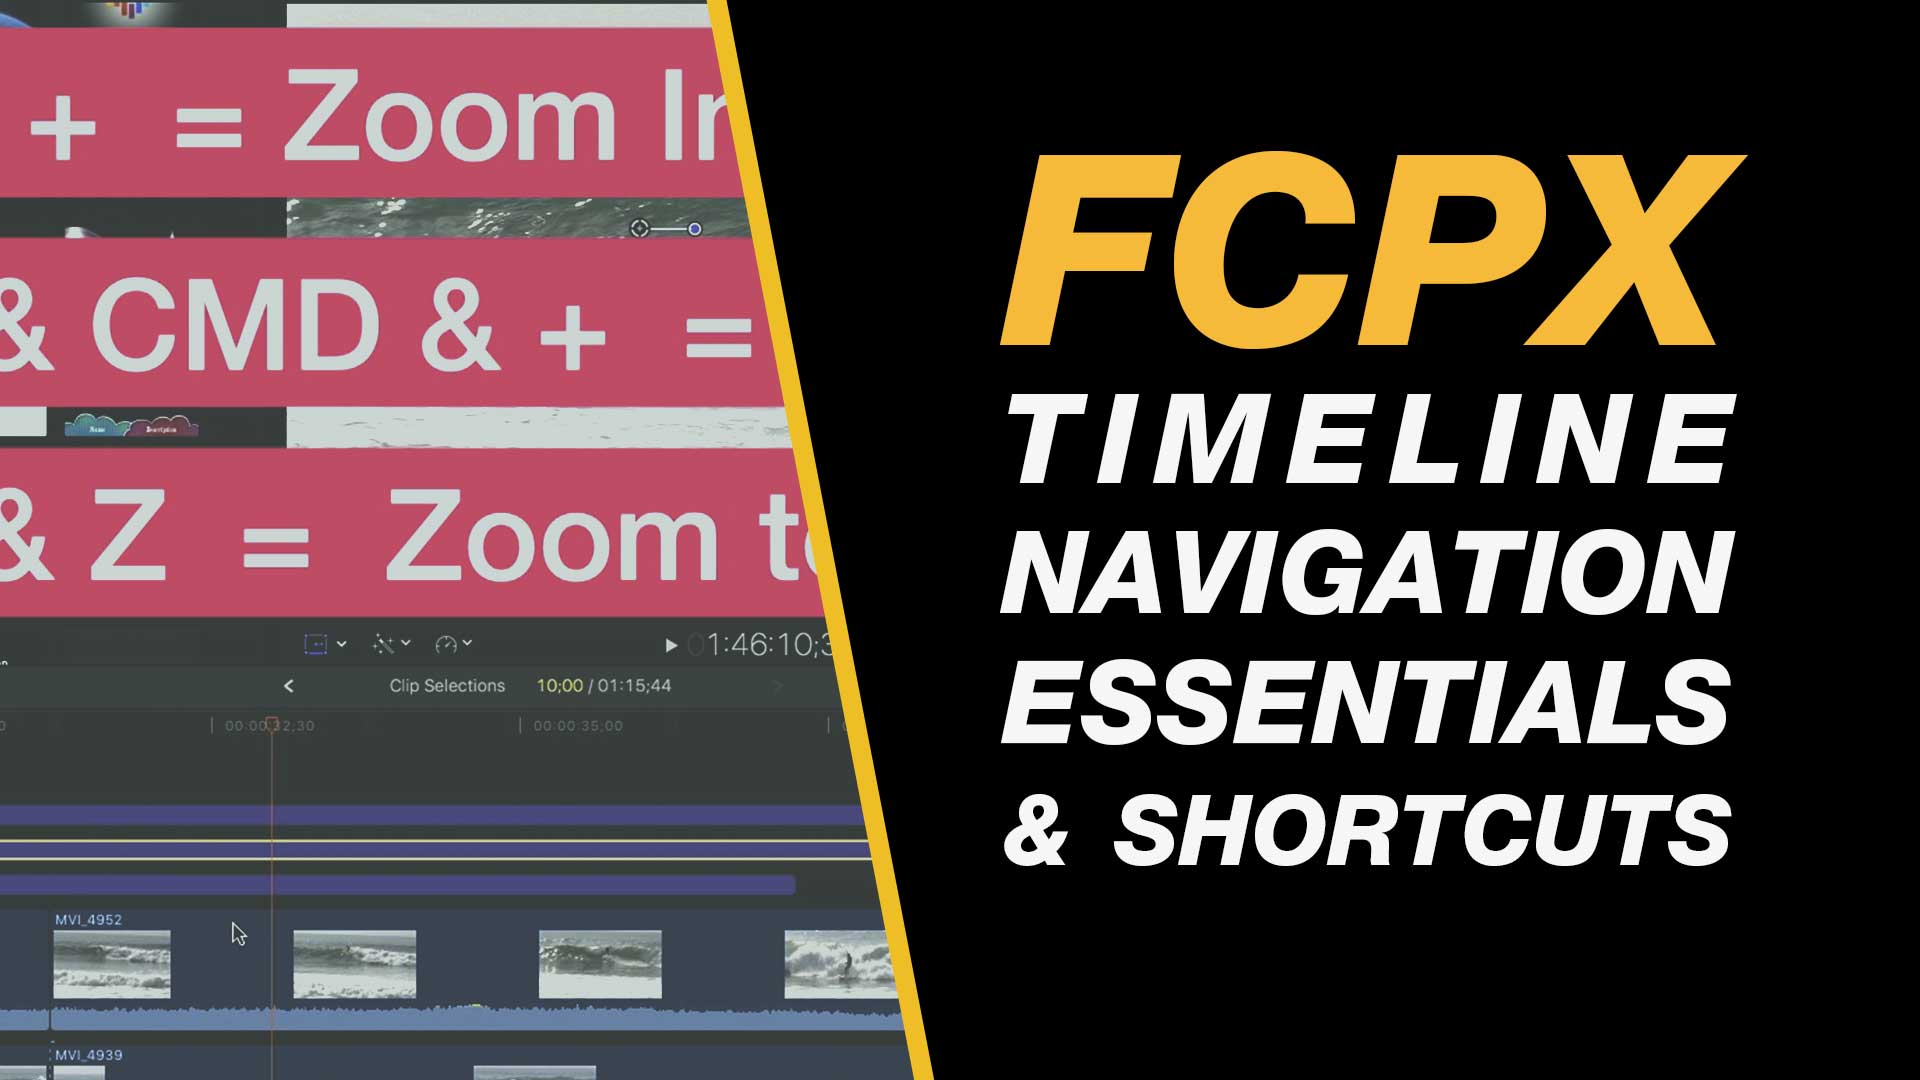 Final Cut Pro X: Timeline Navigation Tips & Shortcuts Tutorial for Beginners #FCPX #FinalCutPro #FinalCutProX #VideoEditing